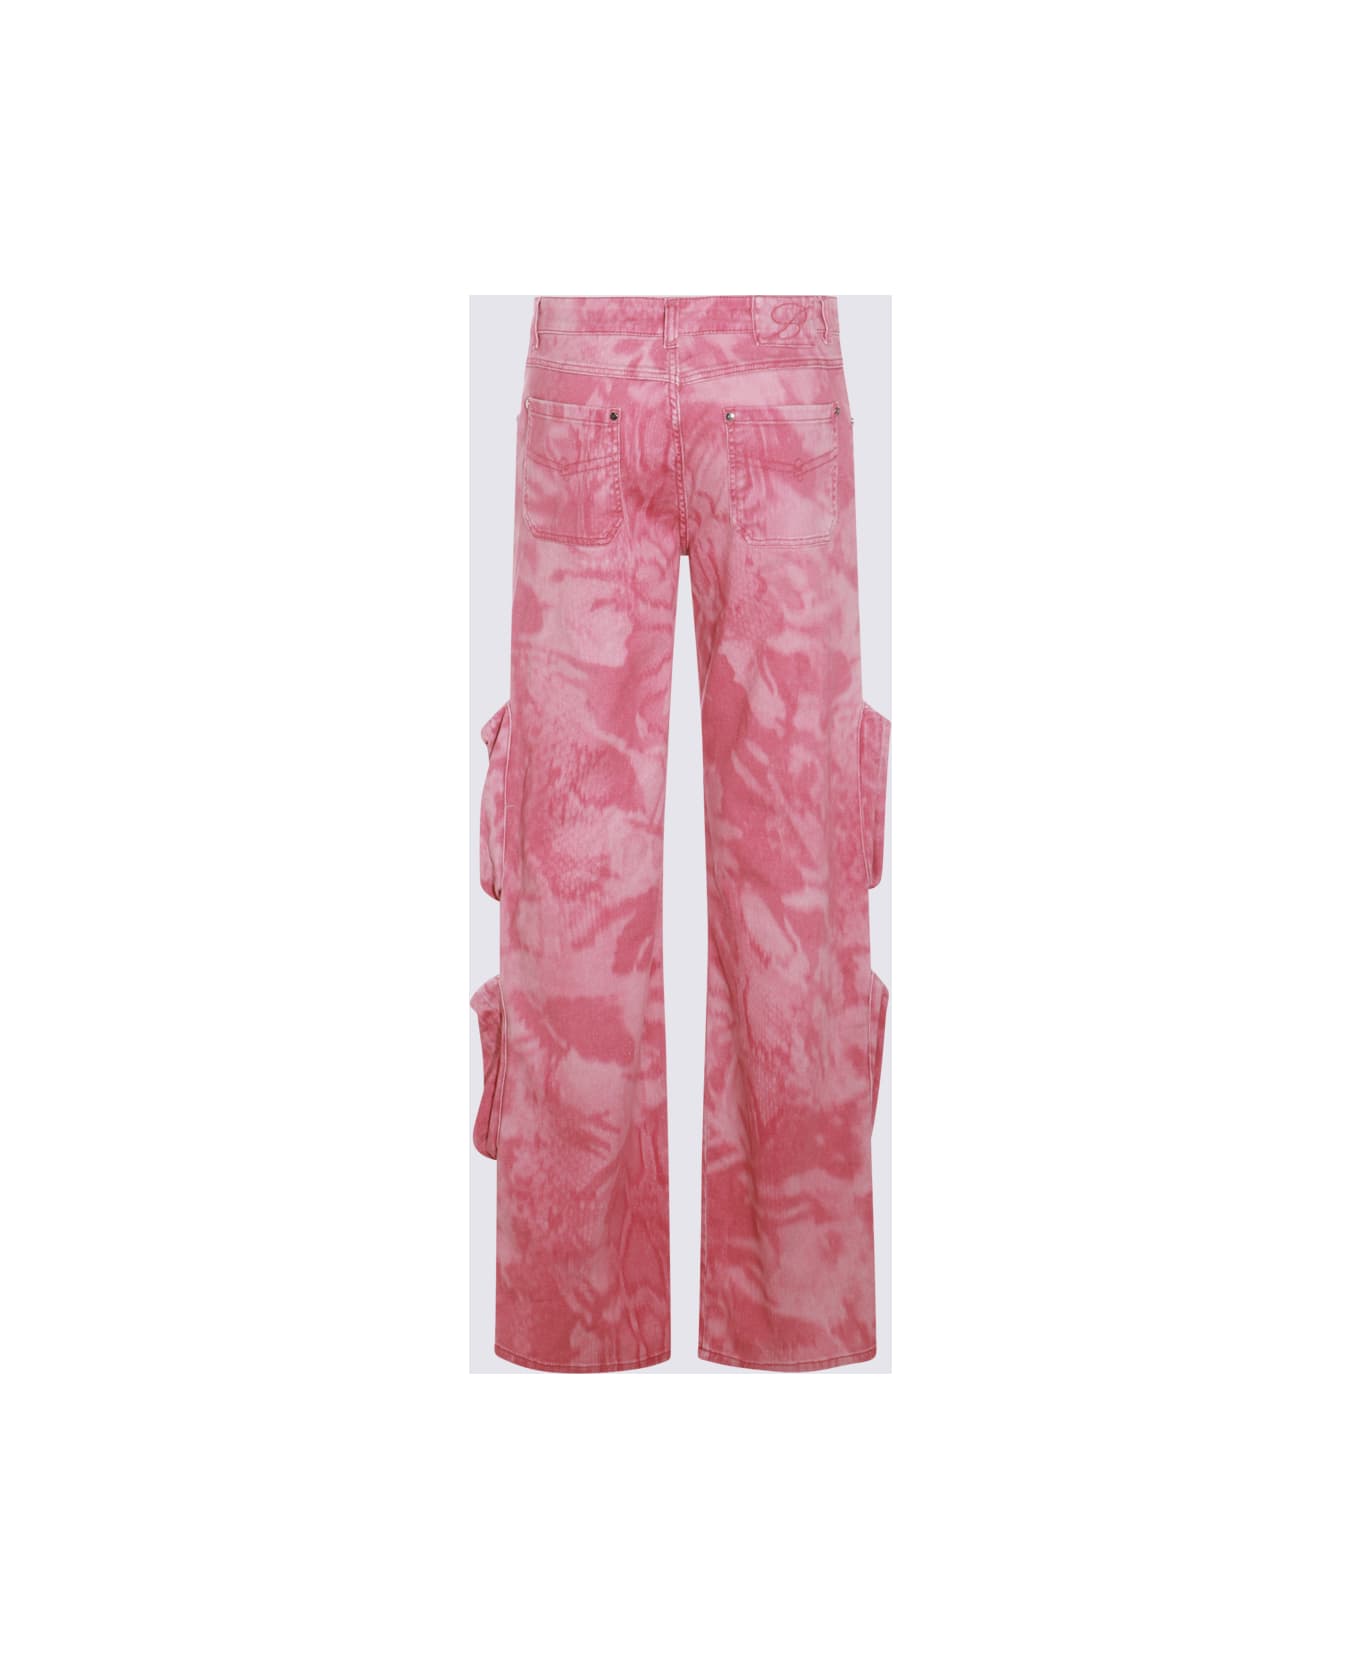 Blumarine Pink Cotton Blend Cargo Jeans - ROSE WINE/WILD ROSE ボトムス